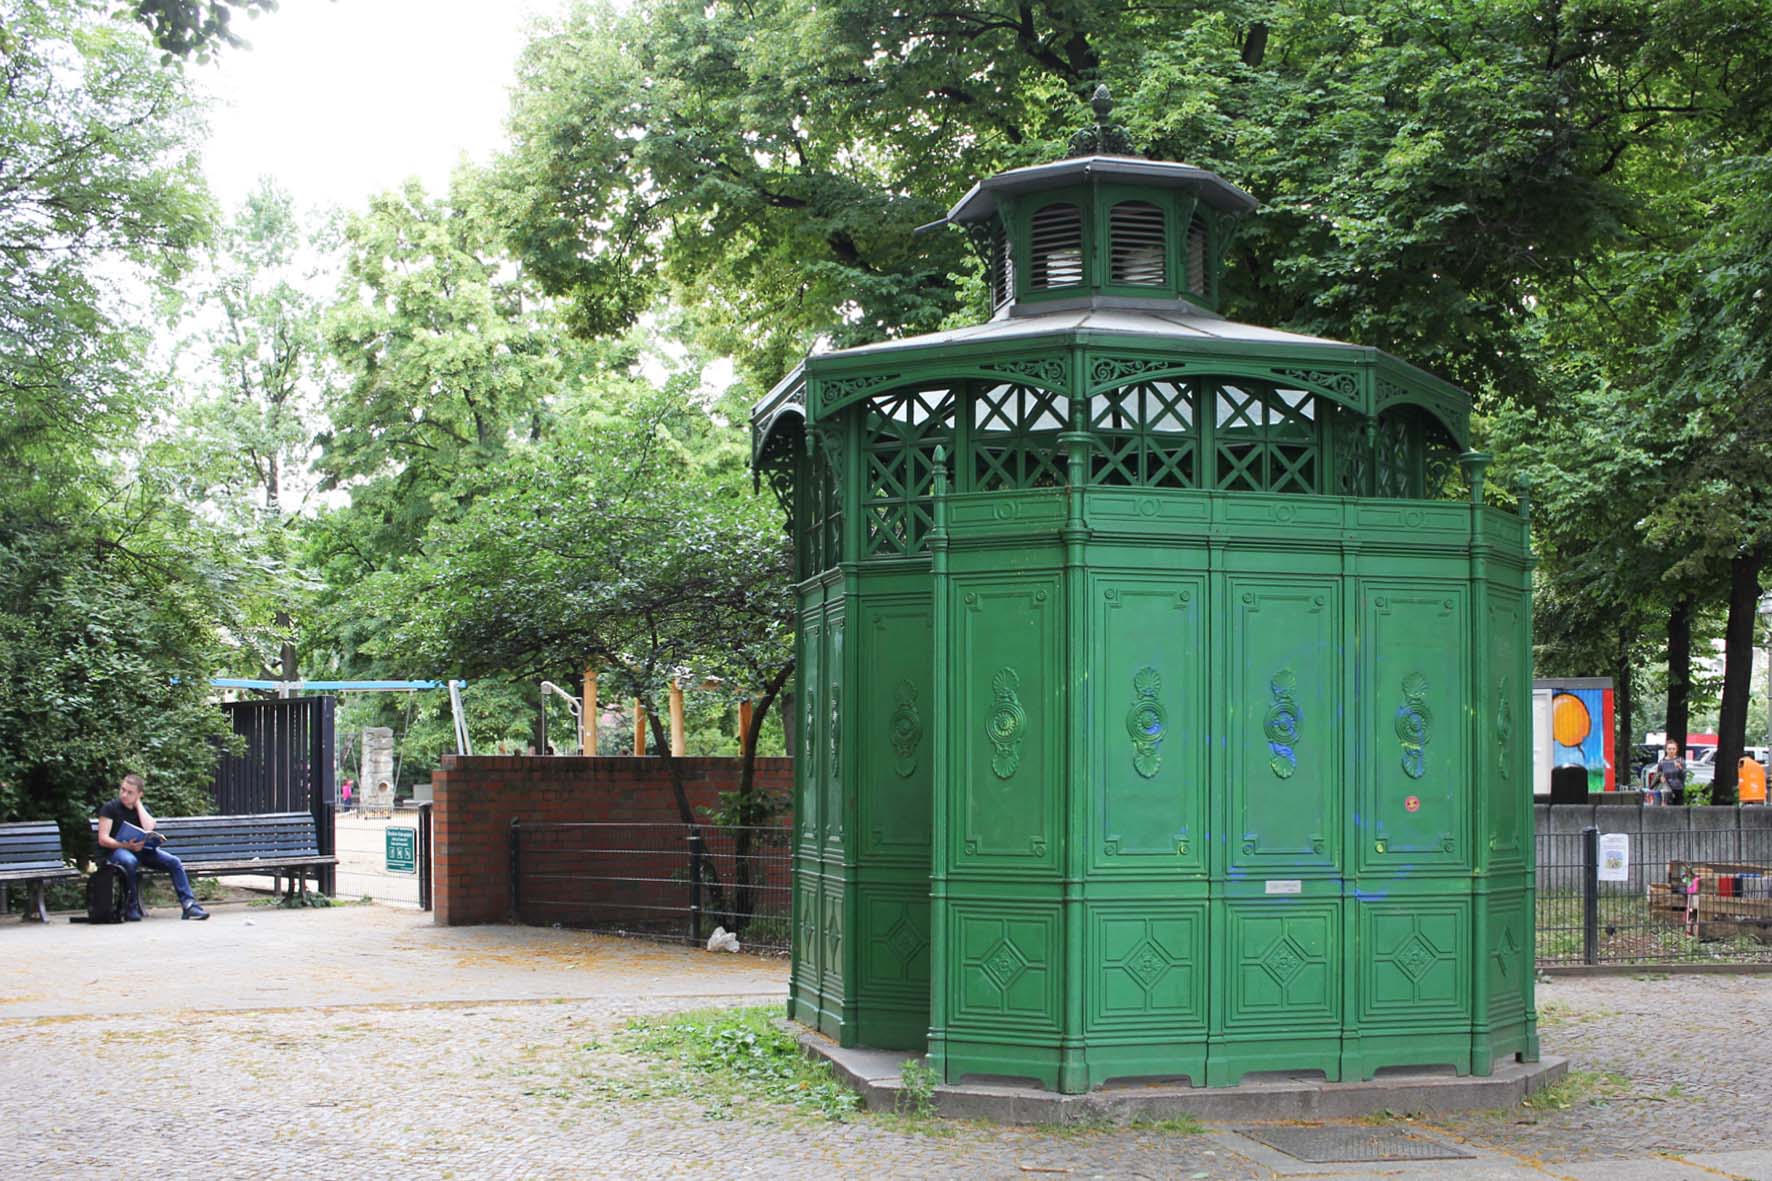 Café Achteck - Stephanplatz - an example of Berlin's classic 19th century green cast iron public toilets